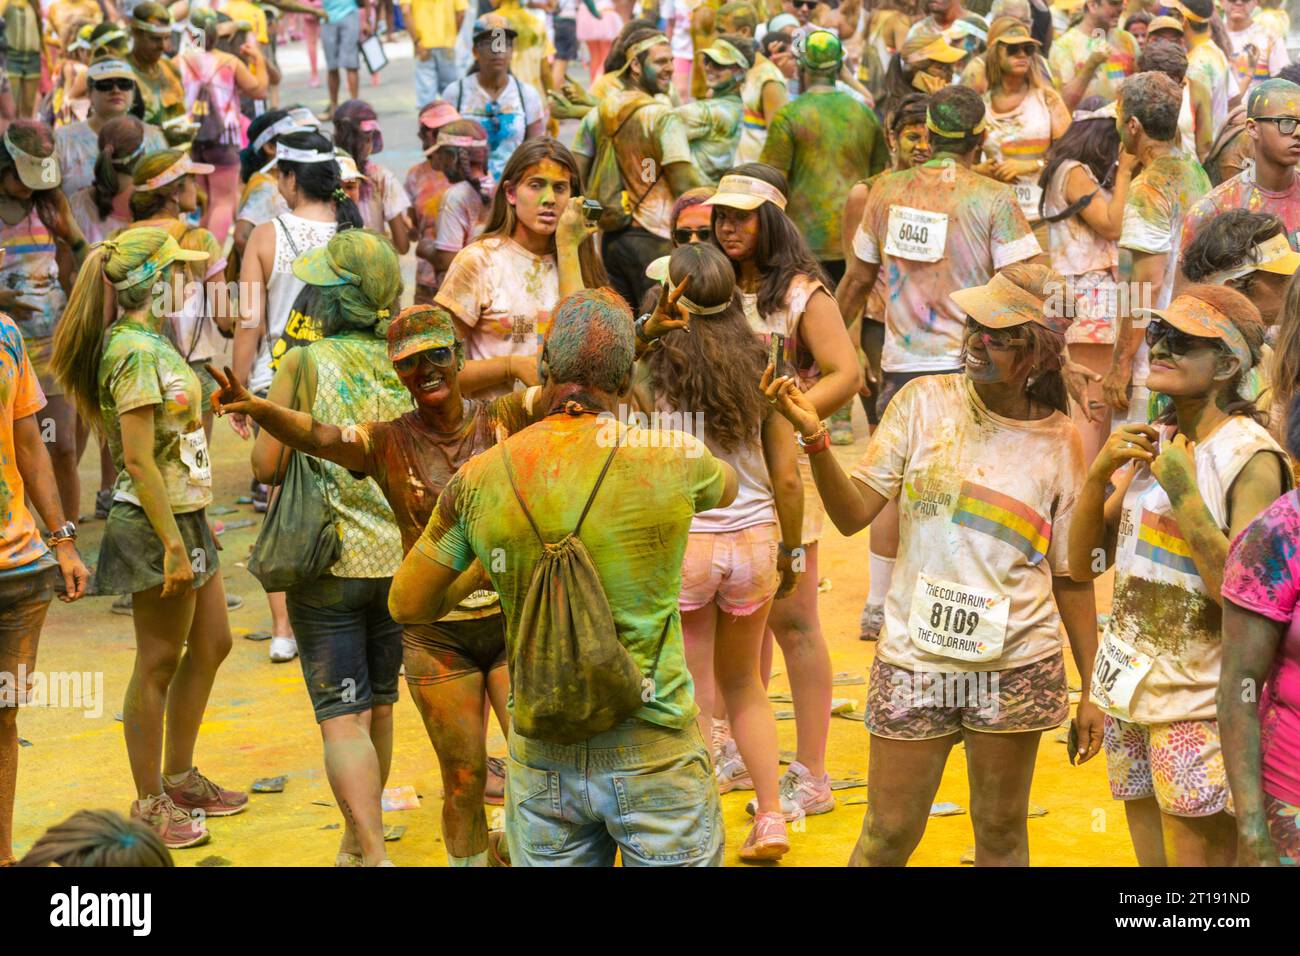 Salvador, Bahia, Brazil - March 22, 2015: Athletes have fun during the color run at Dique do Tororo in the city of Salvador, Bahia. Stock Photo